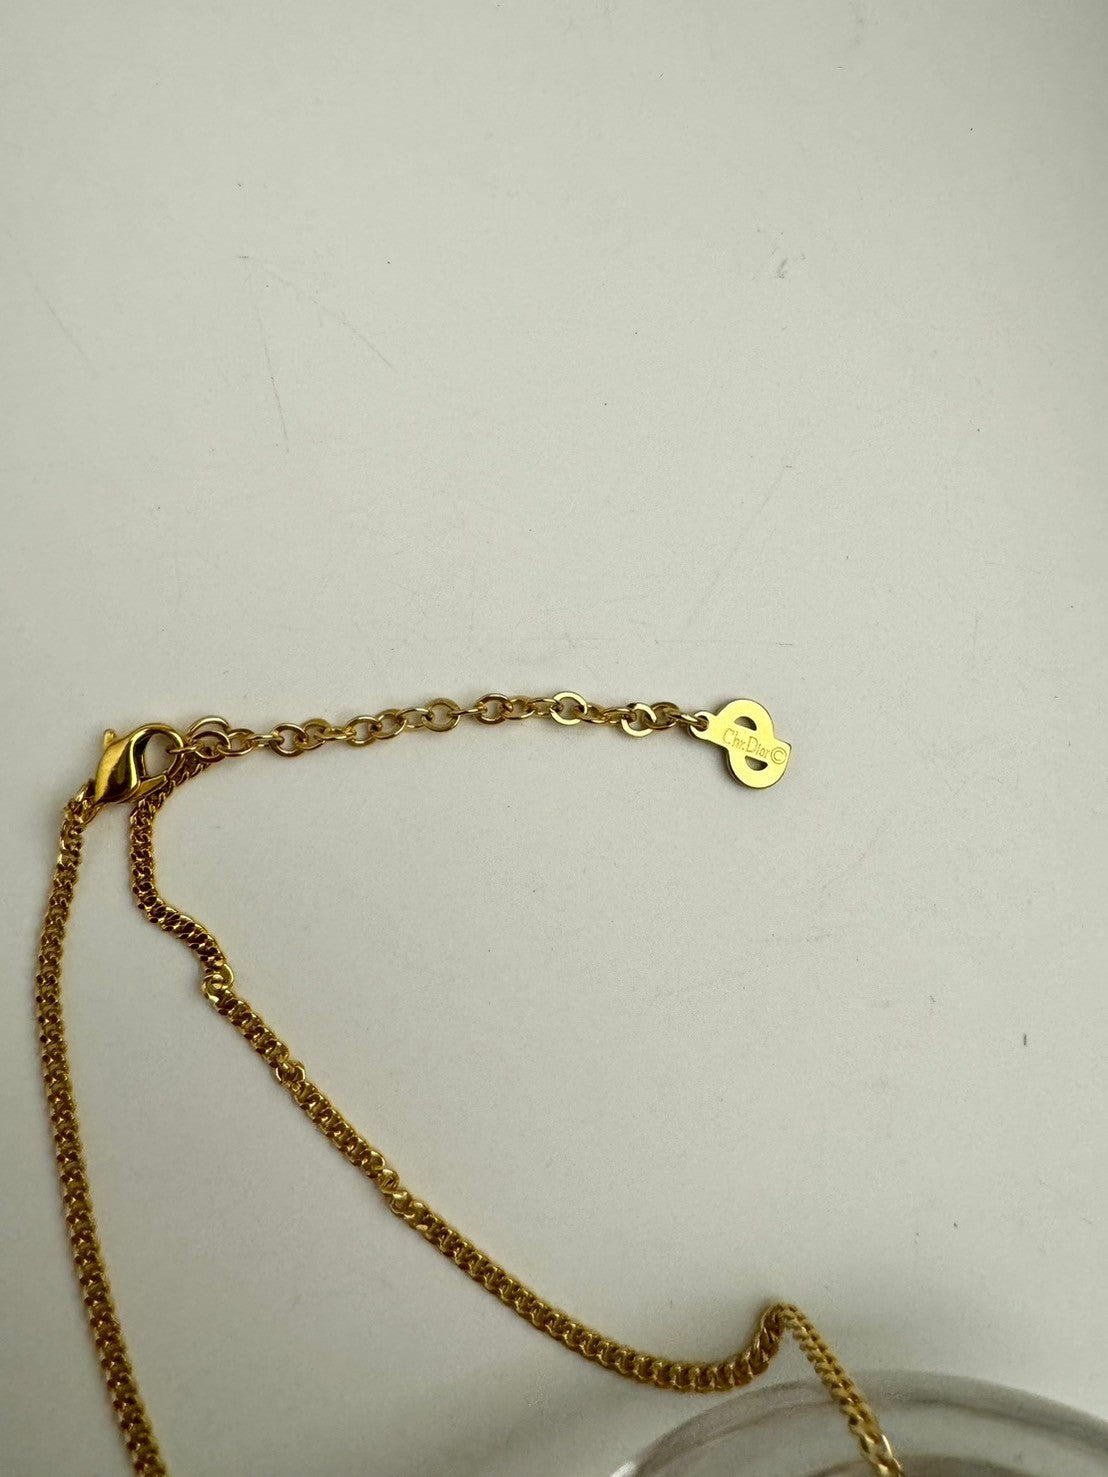 Dior circle logo crystal gold necklace